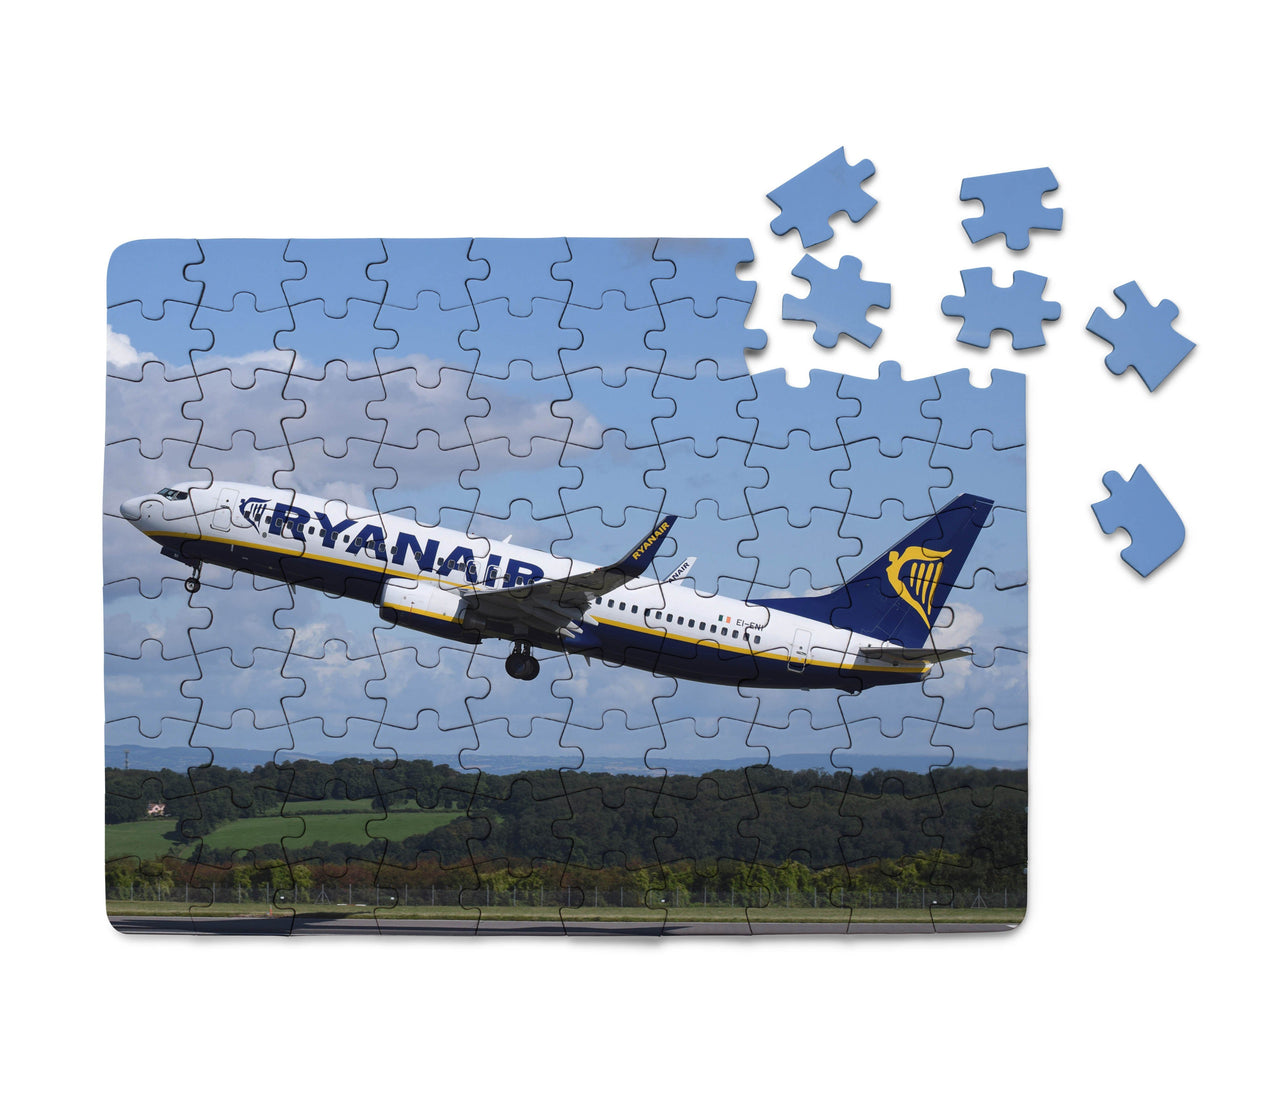 Departing Ryanair's Boeing 737 Printed Puzzles Aviation Shop 